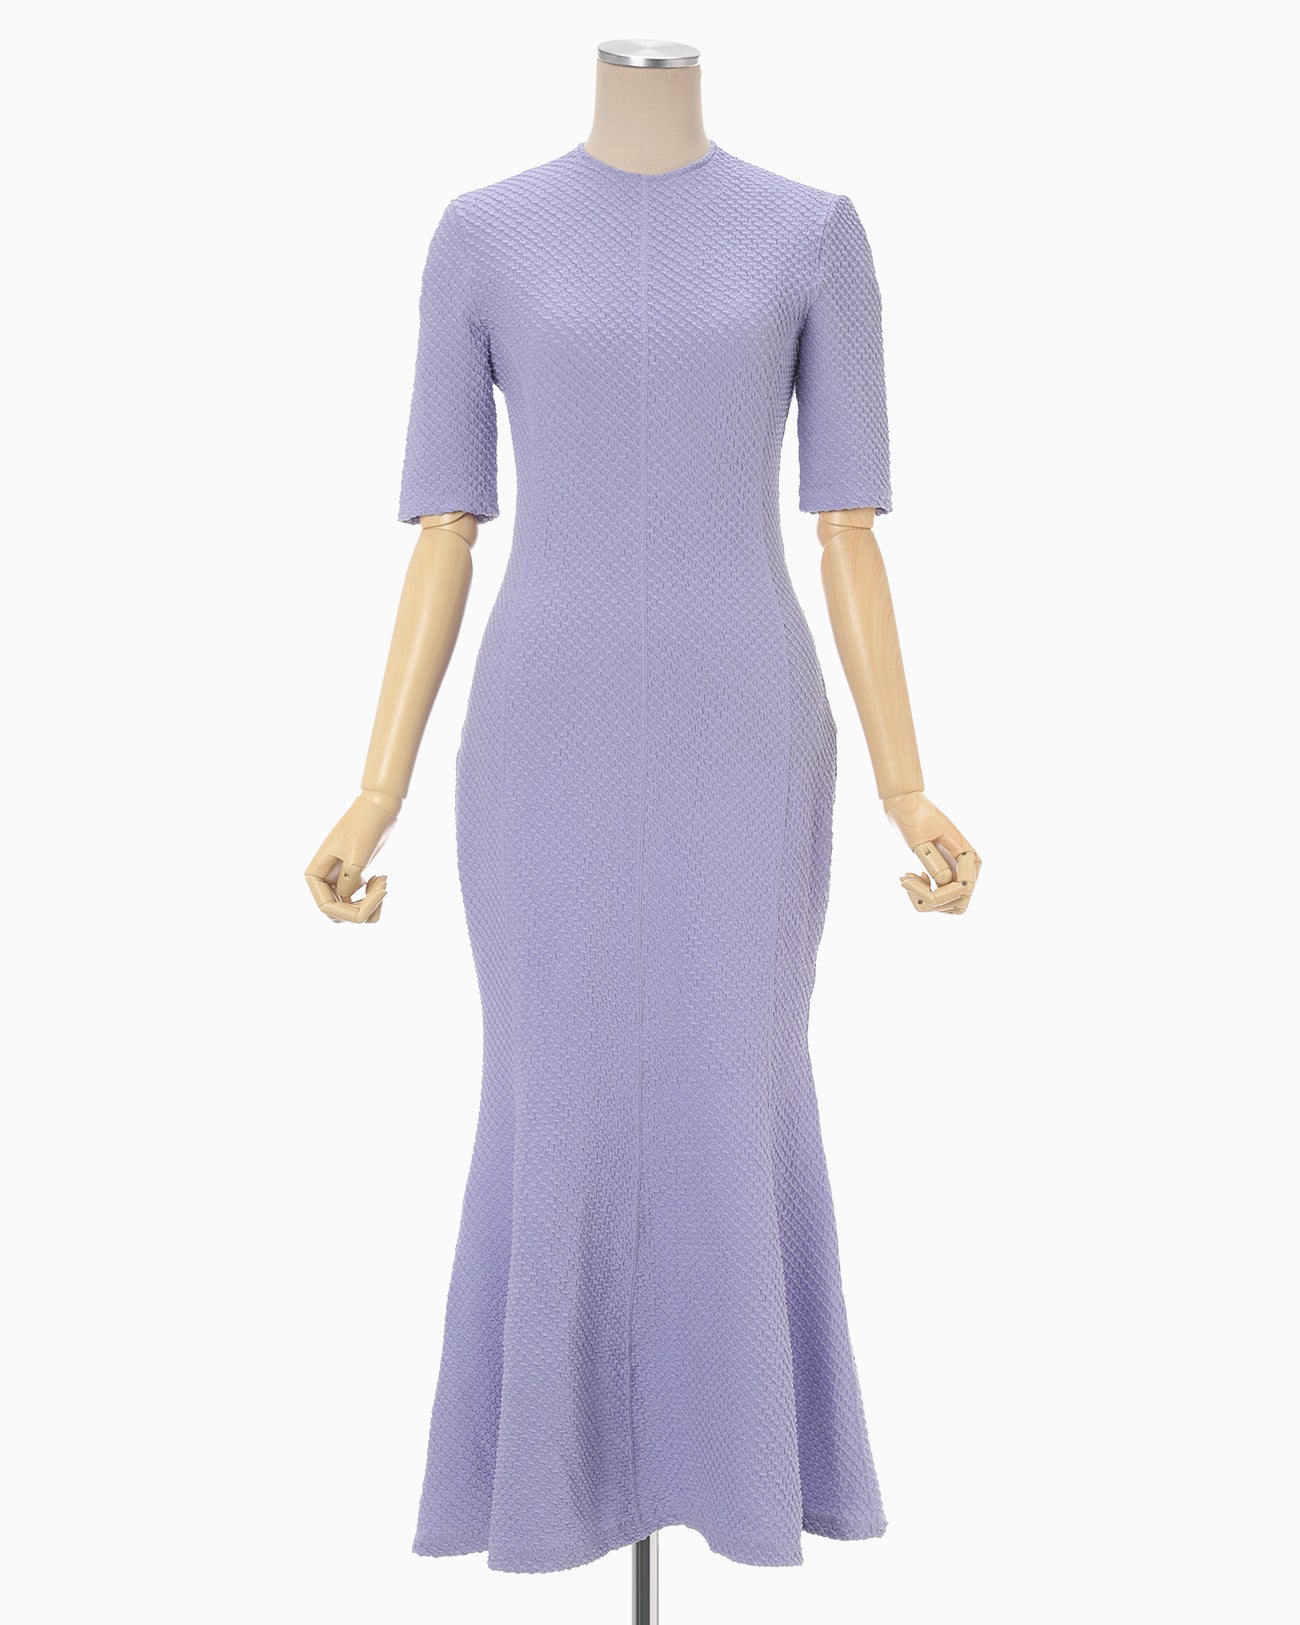 Shirring Jersey Jacquard Mermaid Dress - purple